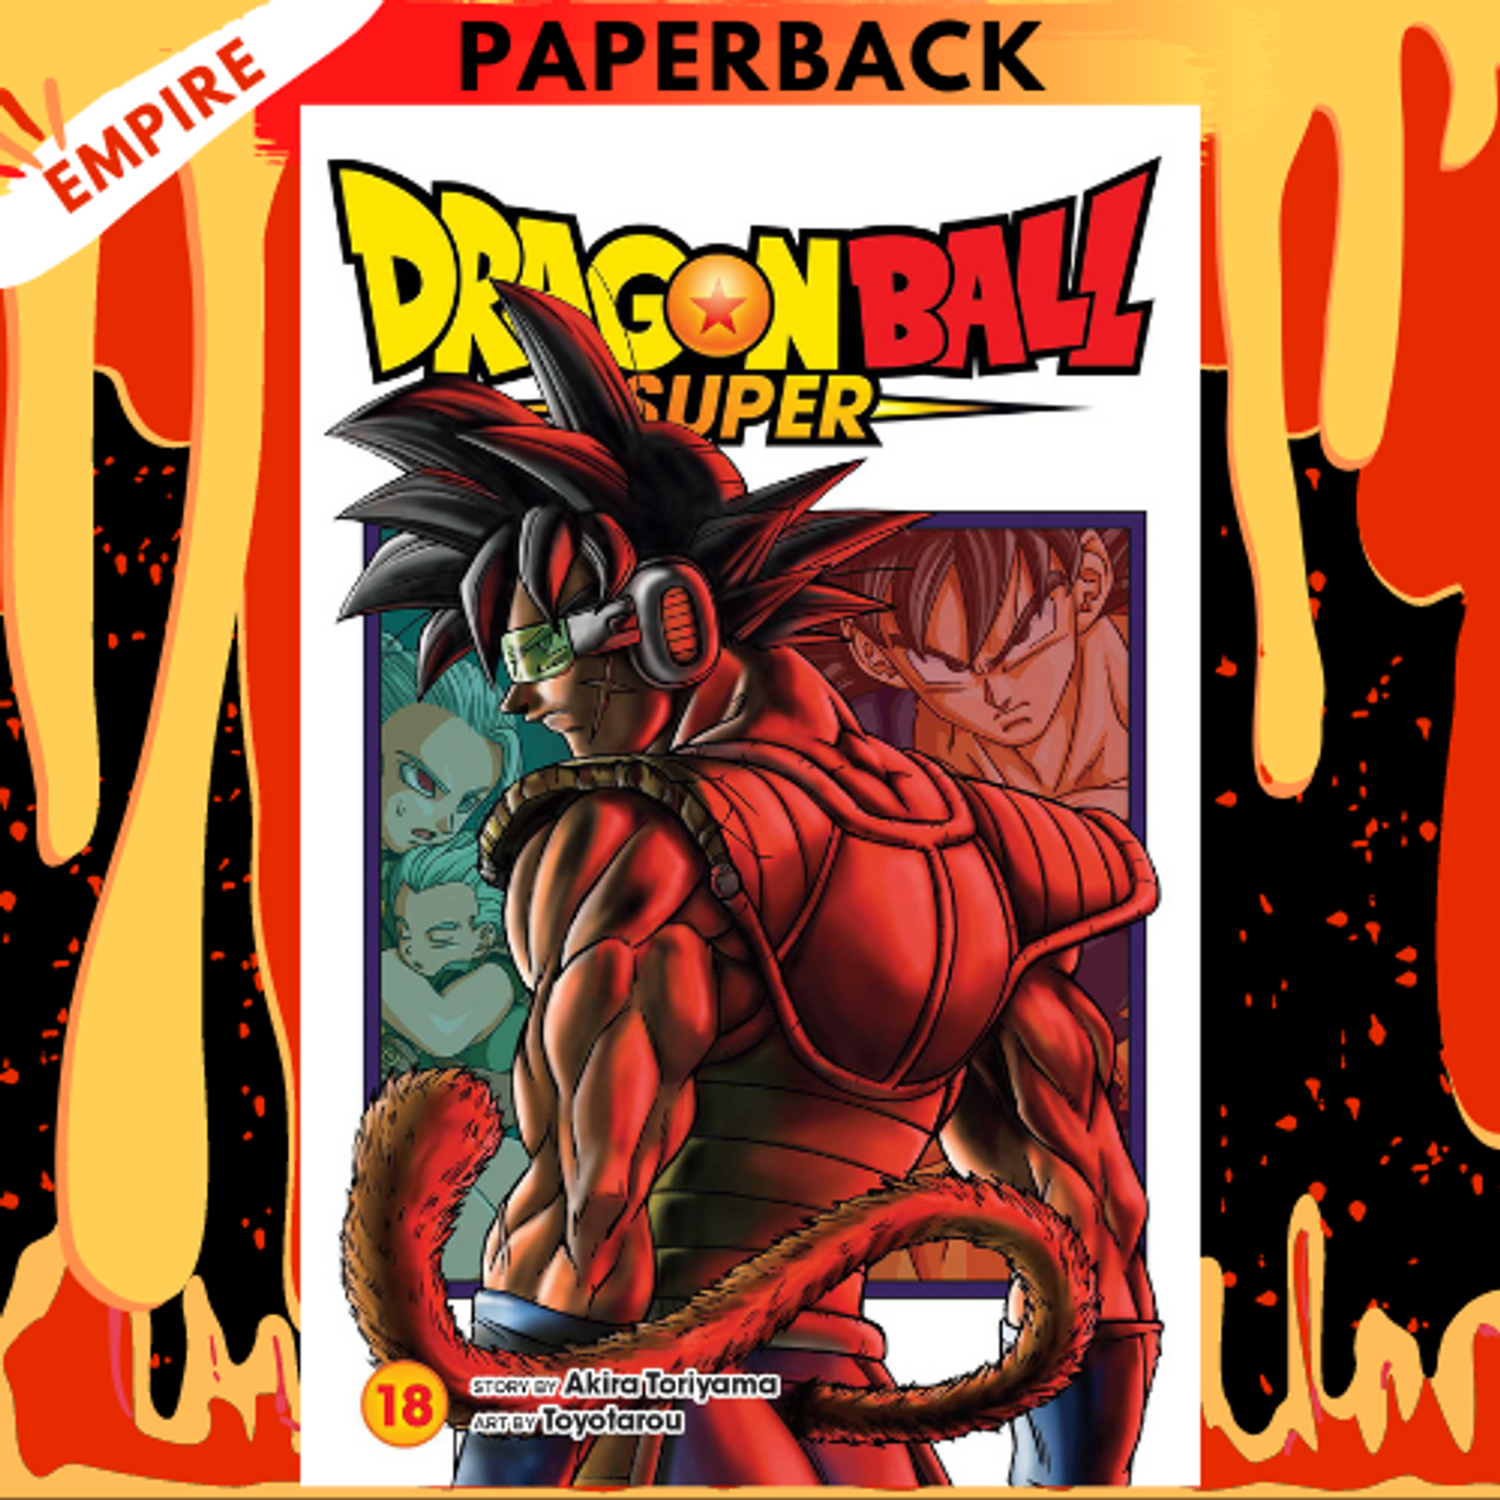 Dragon Ball Super, Vol. 18  Book by Akira Toriyama, Toyotarou